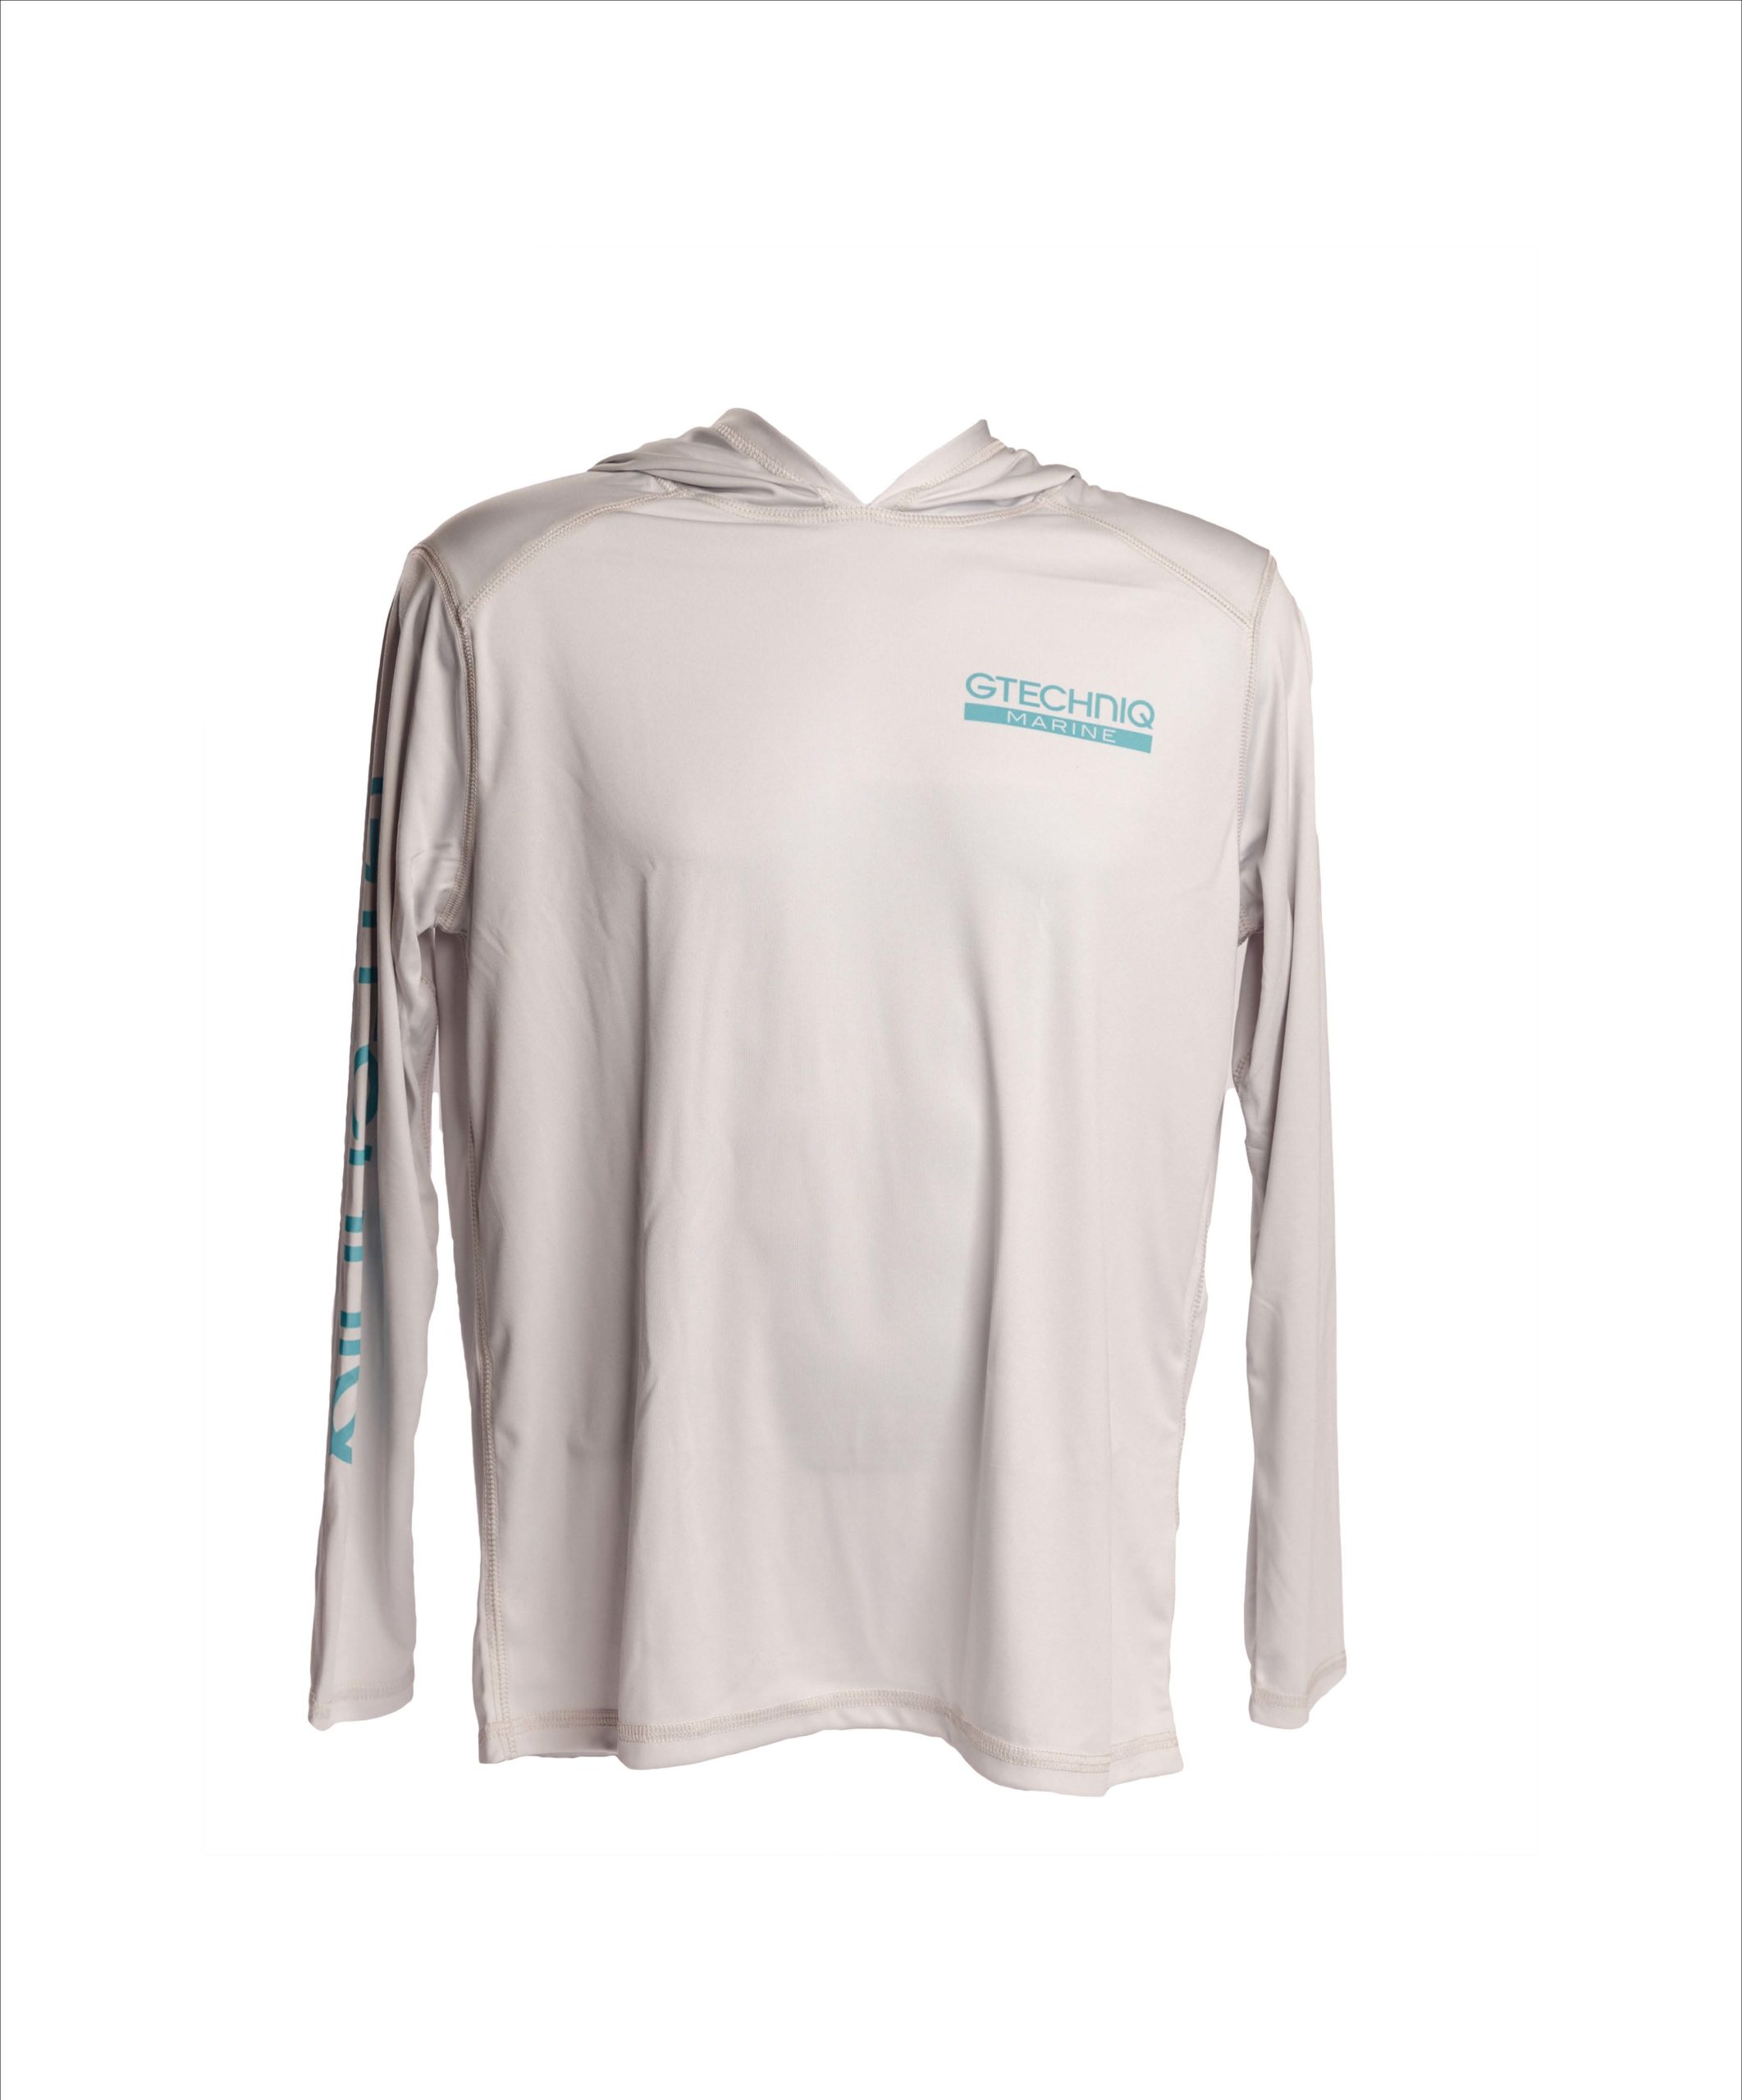 Grey Lightweight Sun Protection Hoodie - Gtechniq Marine (T-Shirt Size: XL)